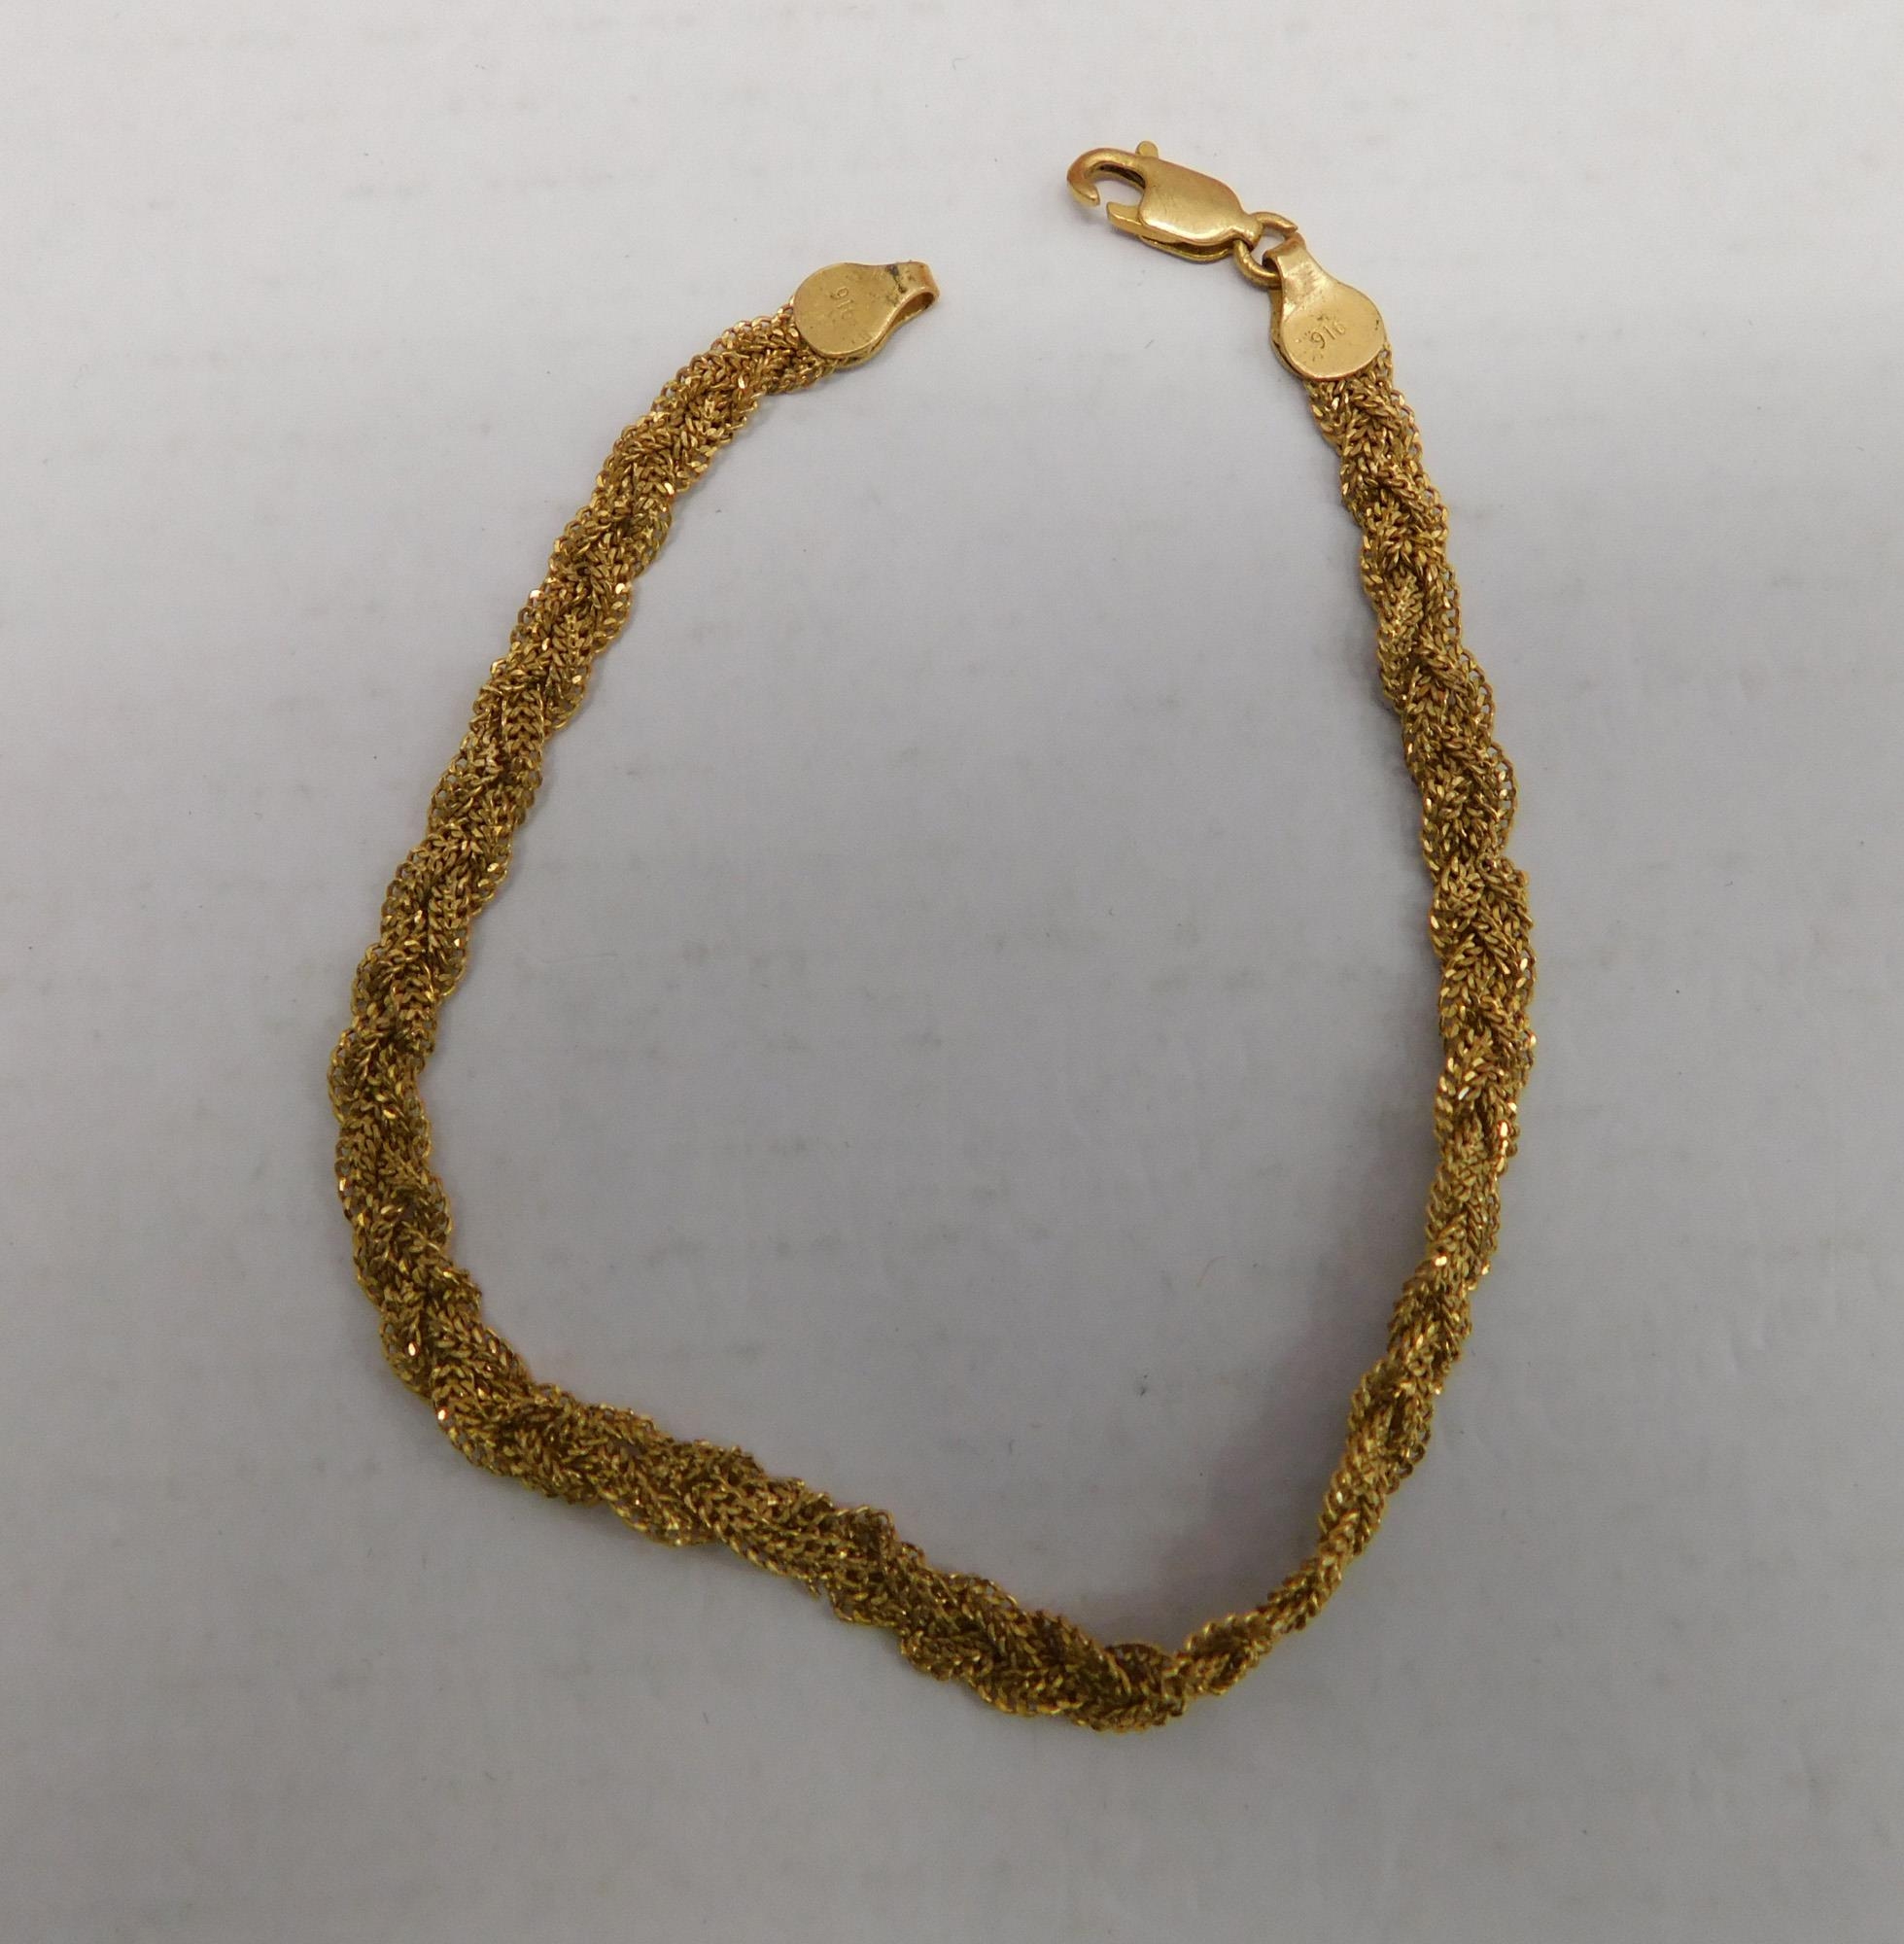 22ct Gold bracelet - weight 6.4g